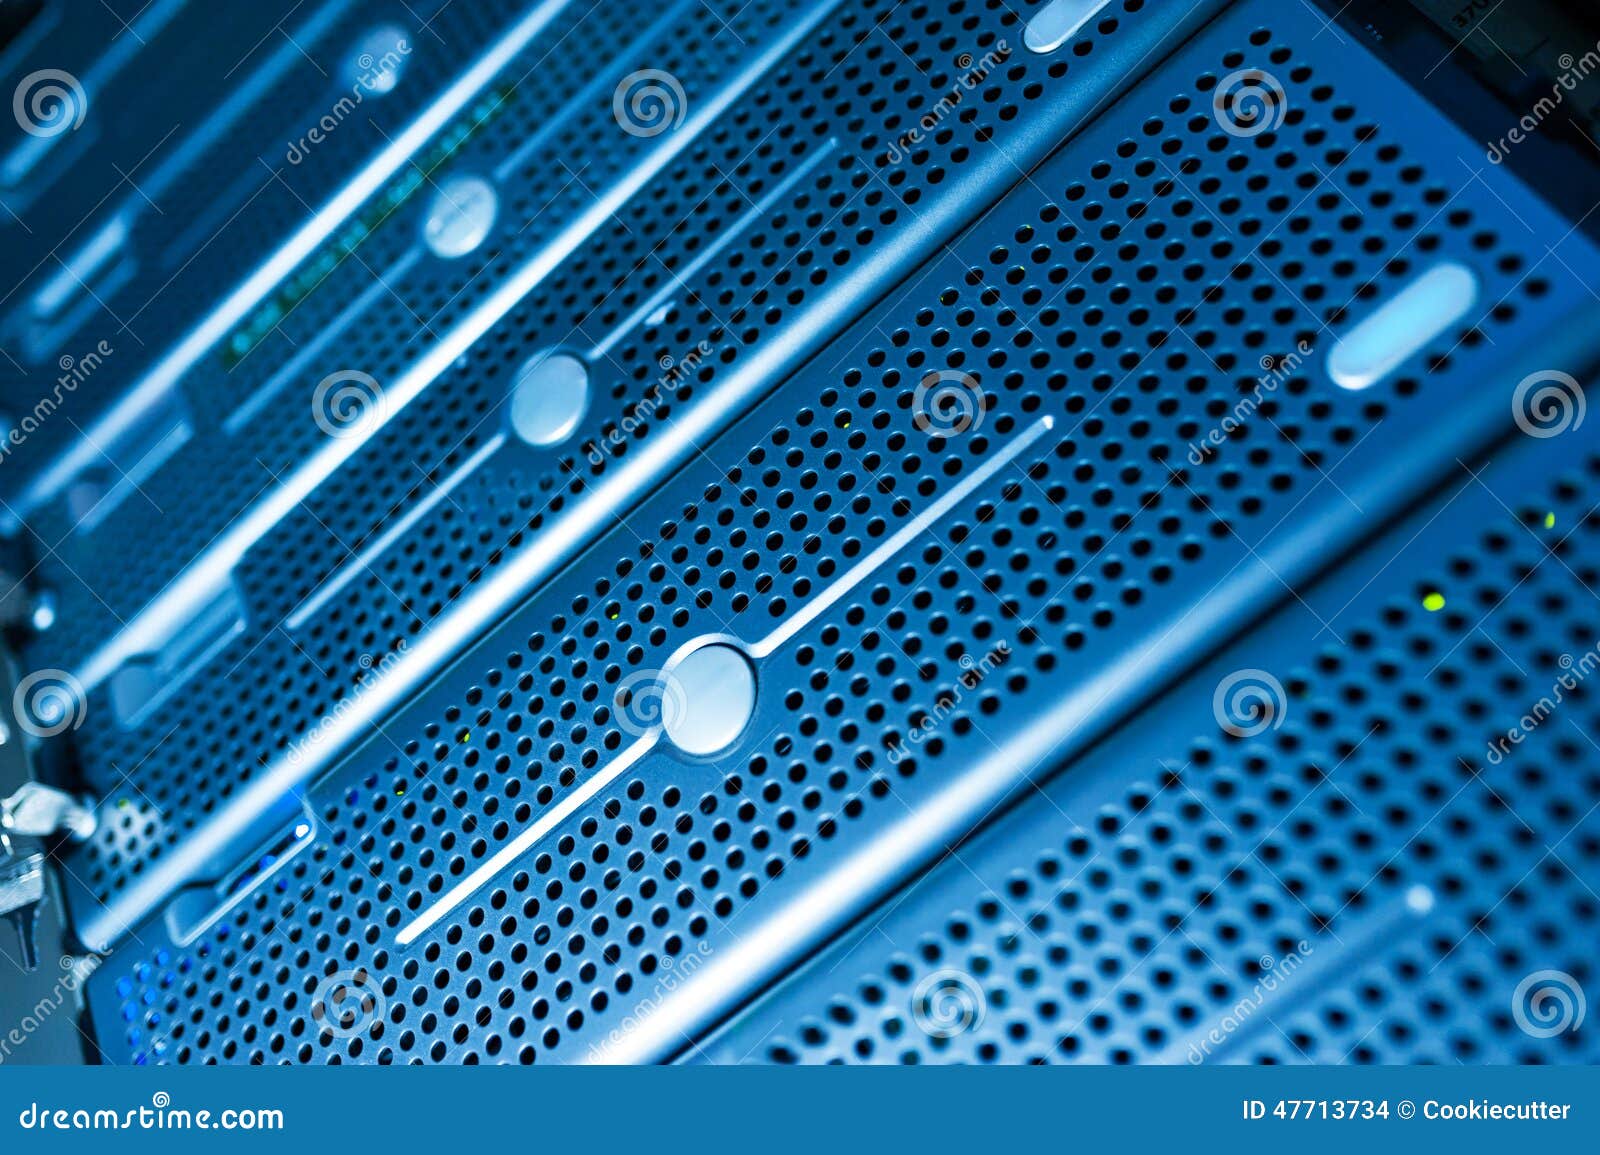 network servers in data room